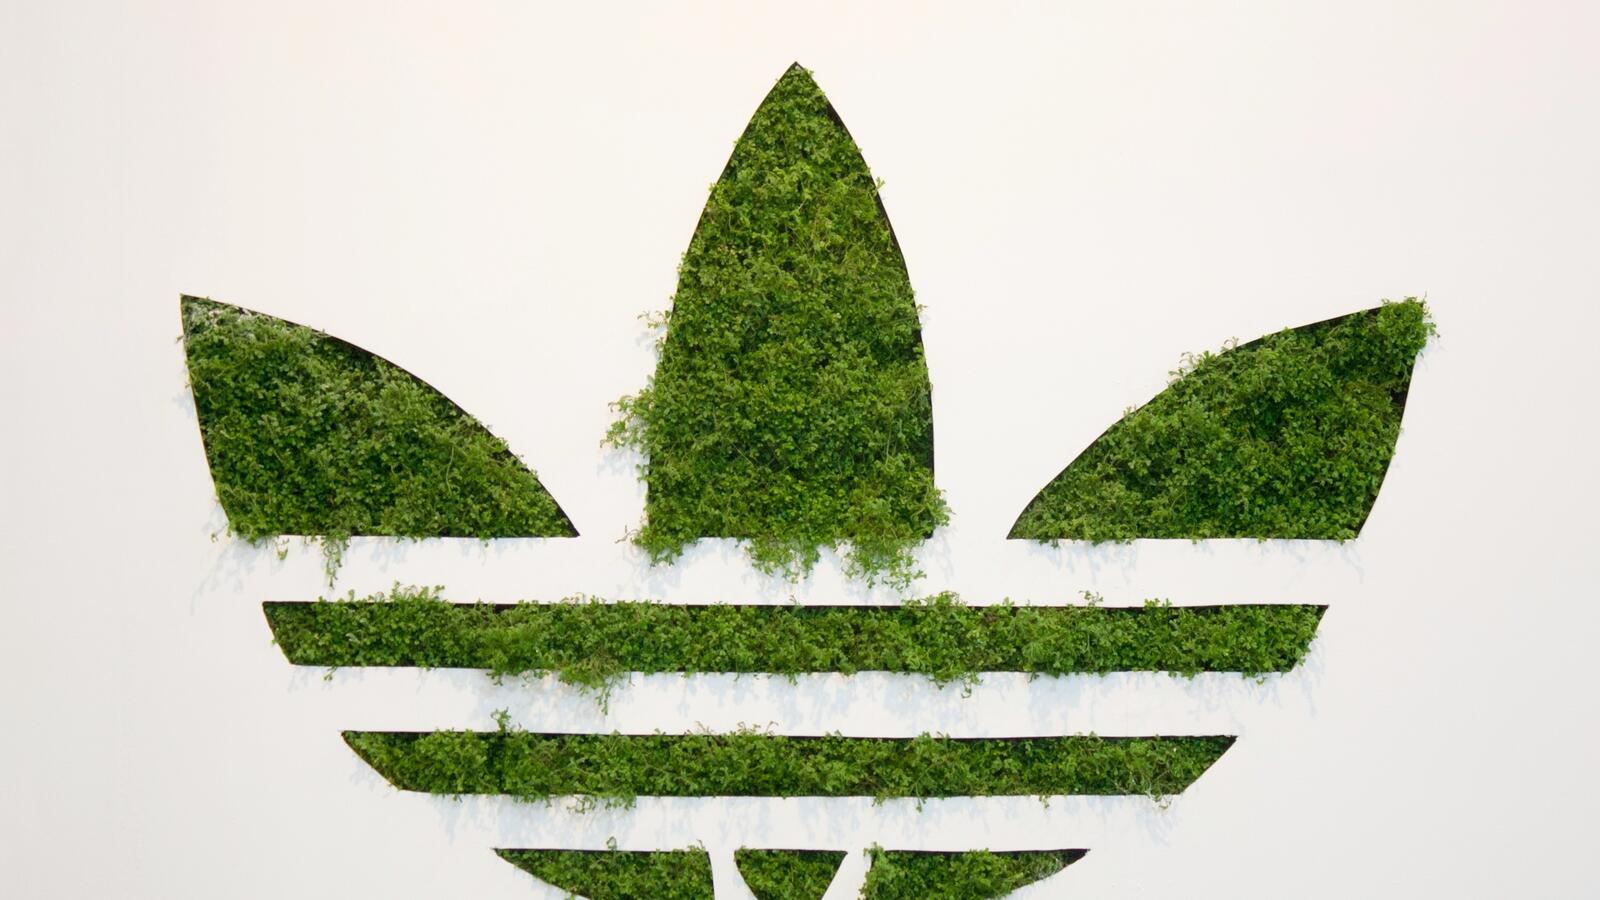 Бесплатное фото Трава растет в логотипе адидас на светлом фоне